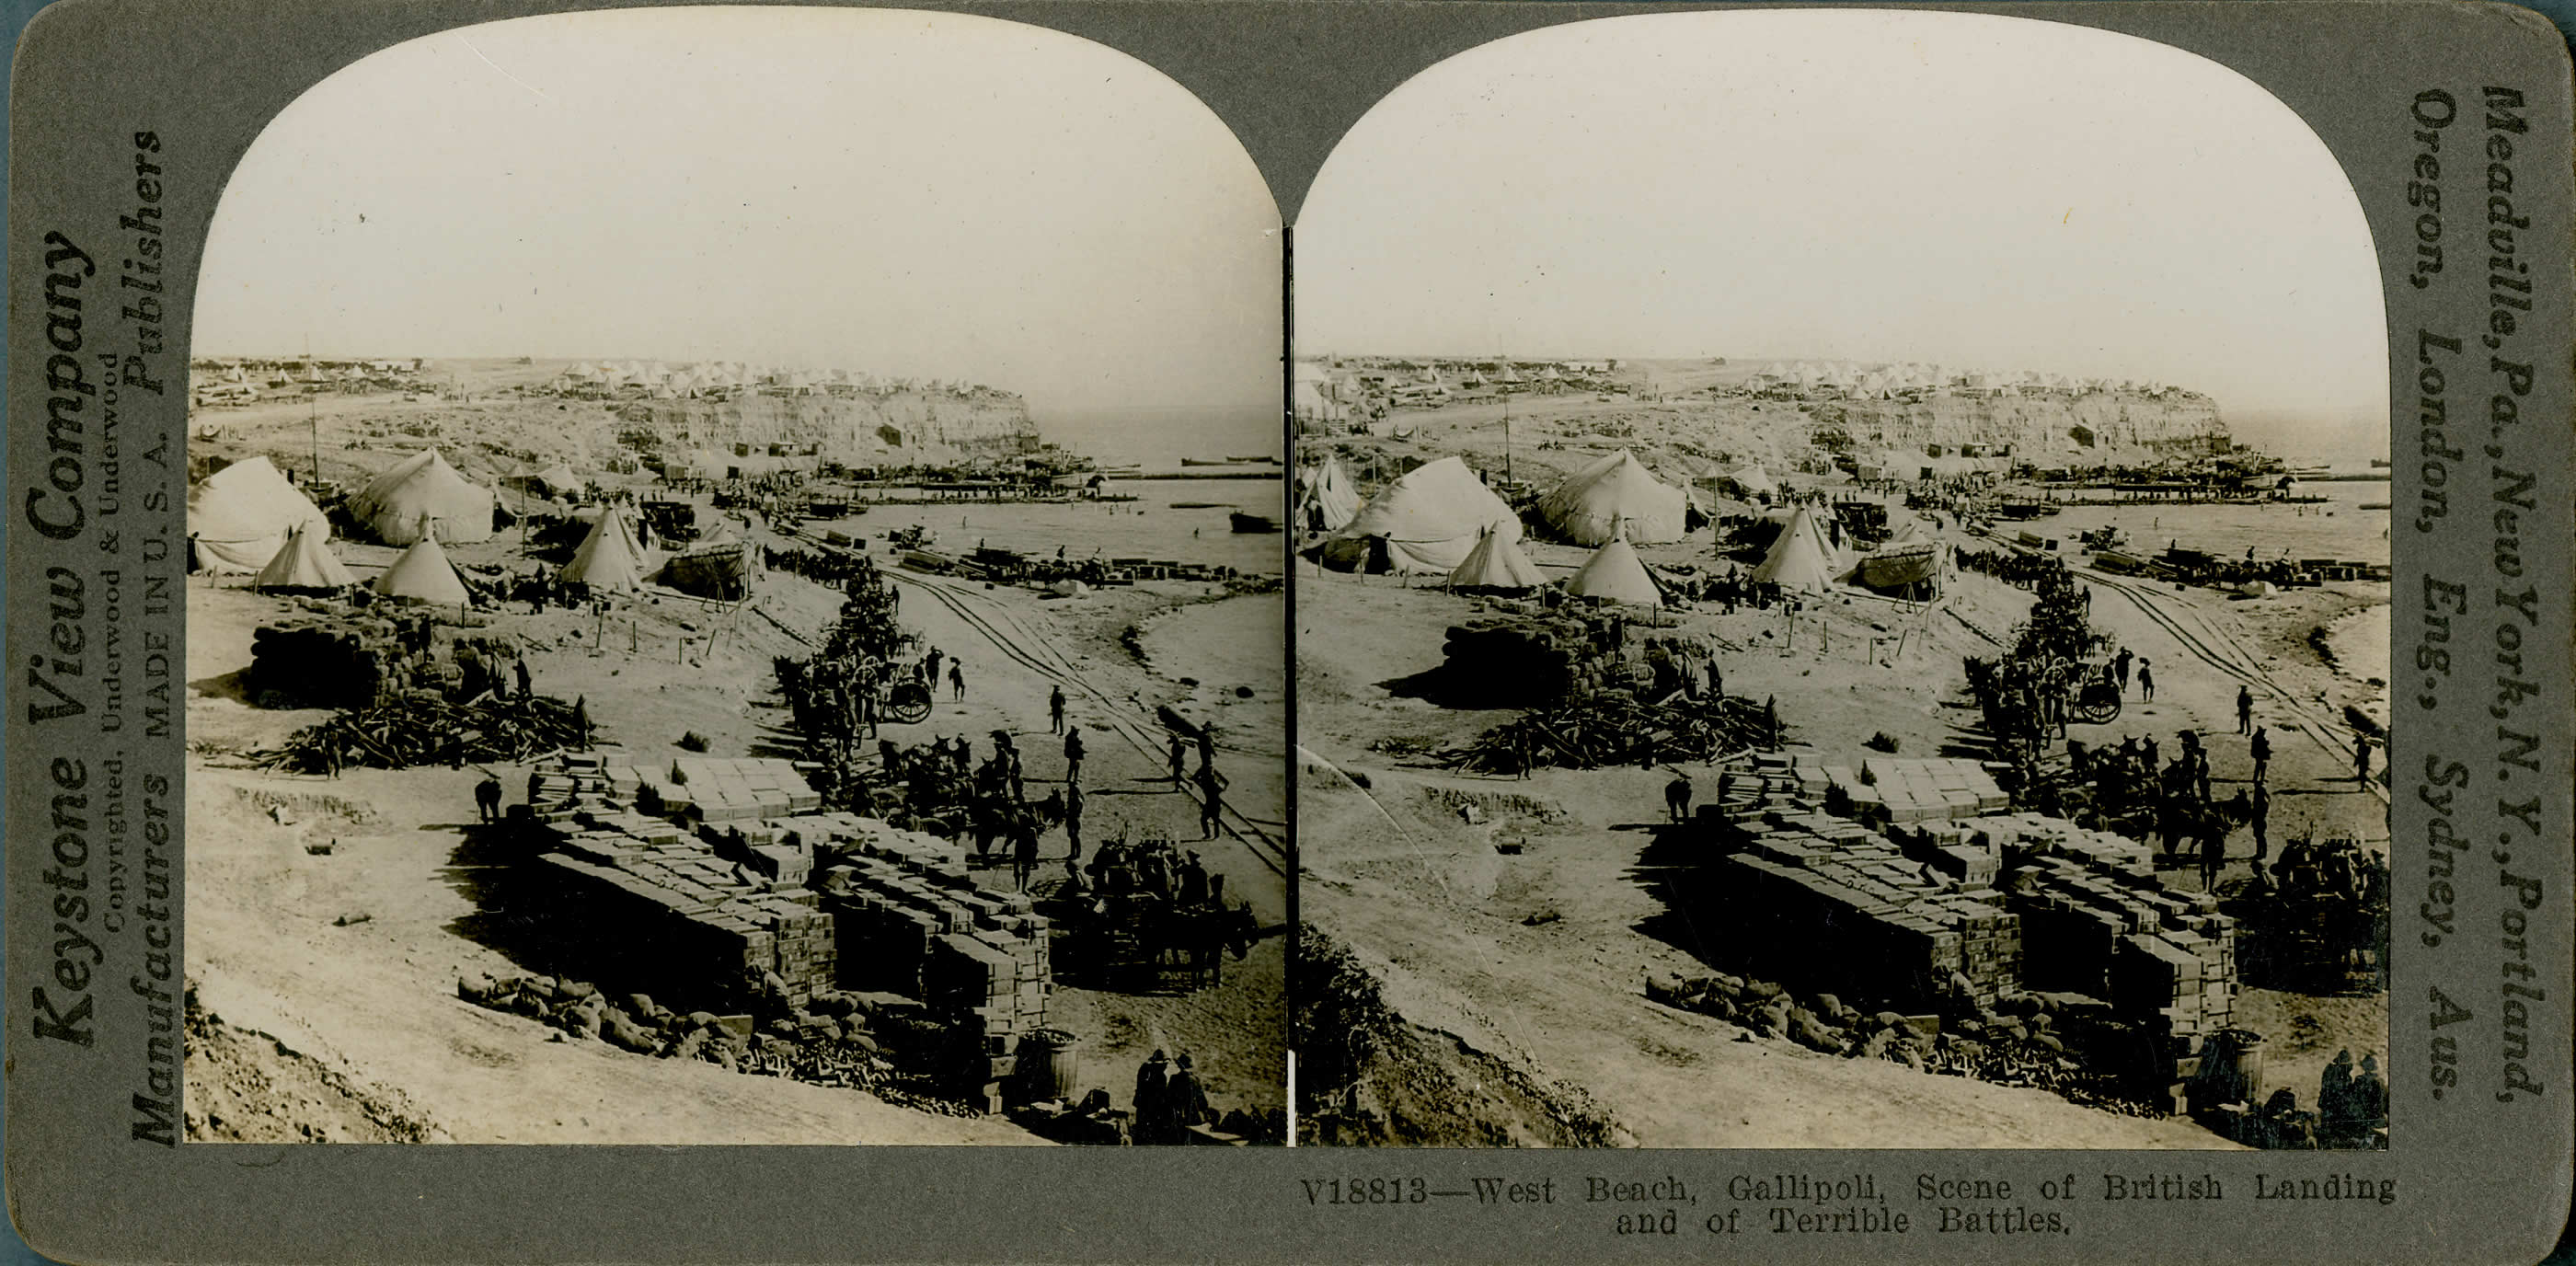 La plage ouest de Gallipoli